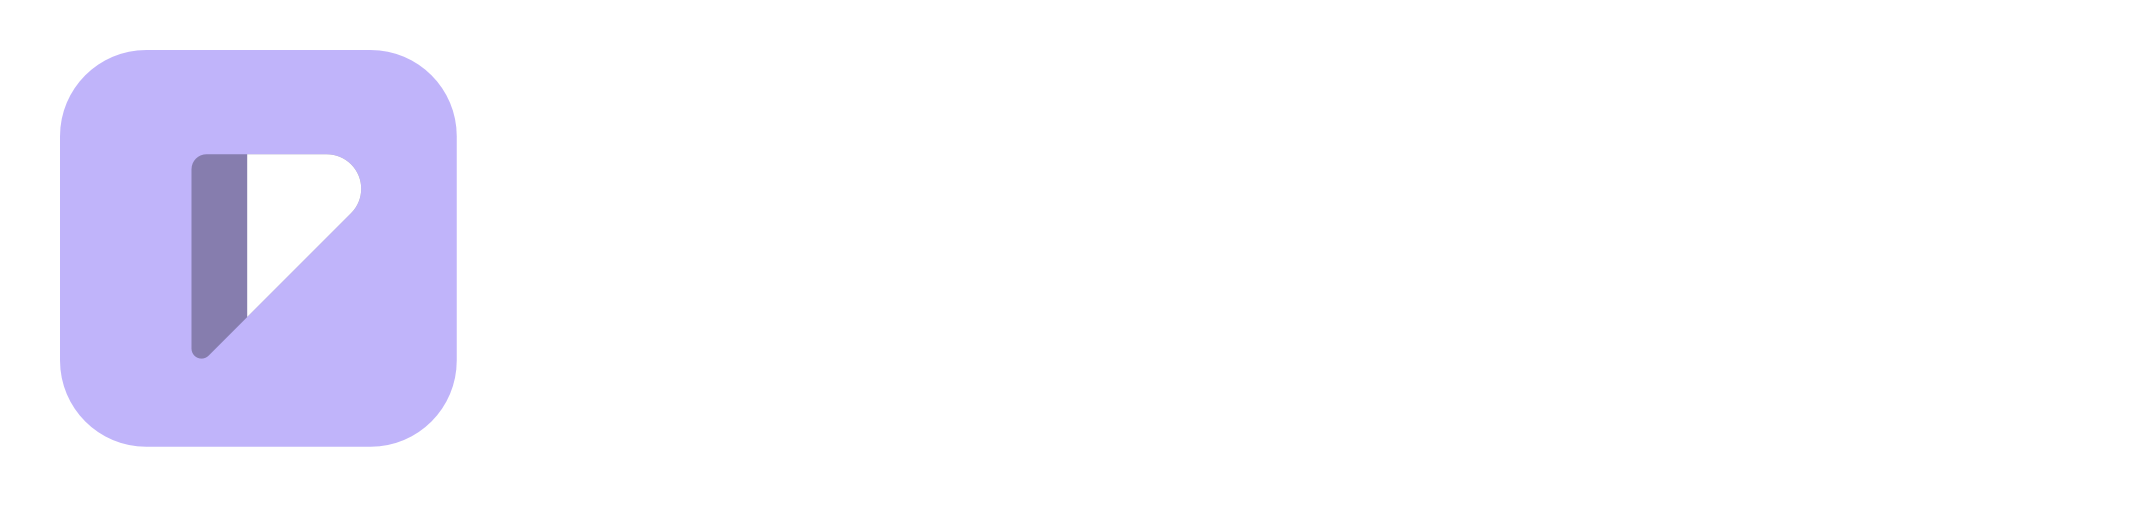 StorePreviewer Logo